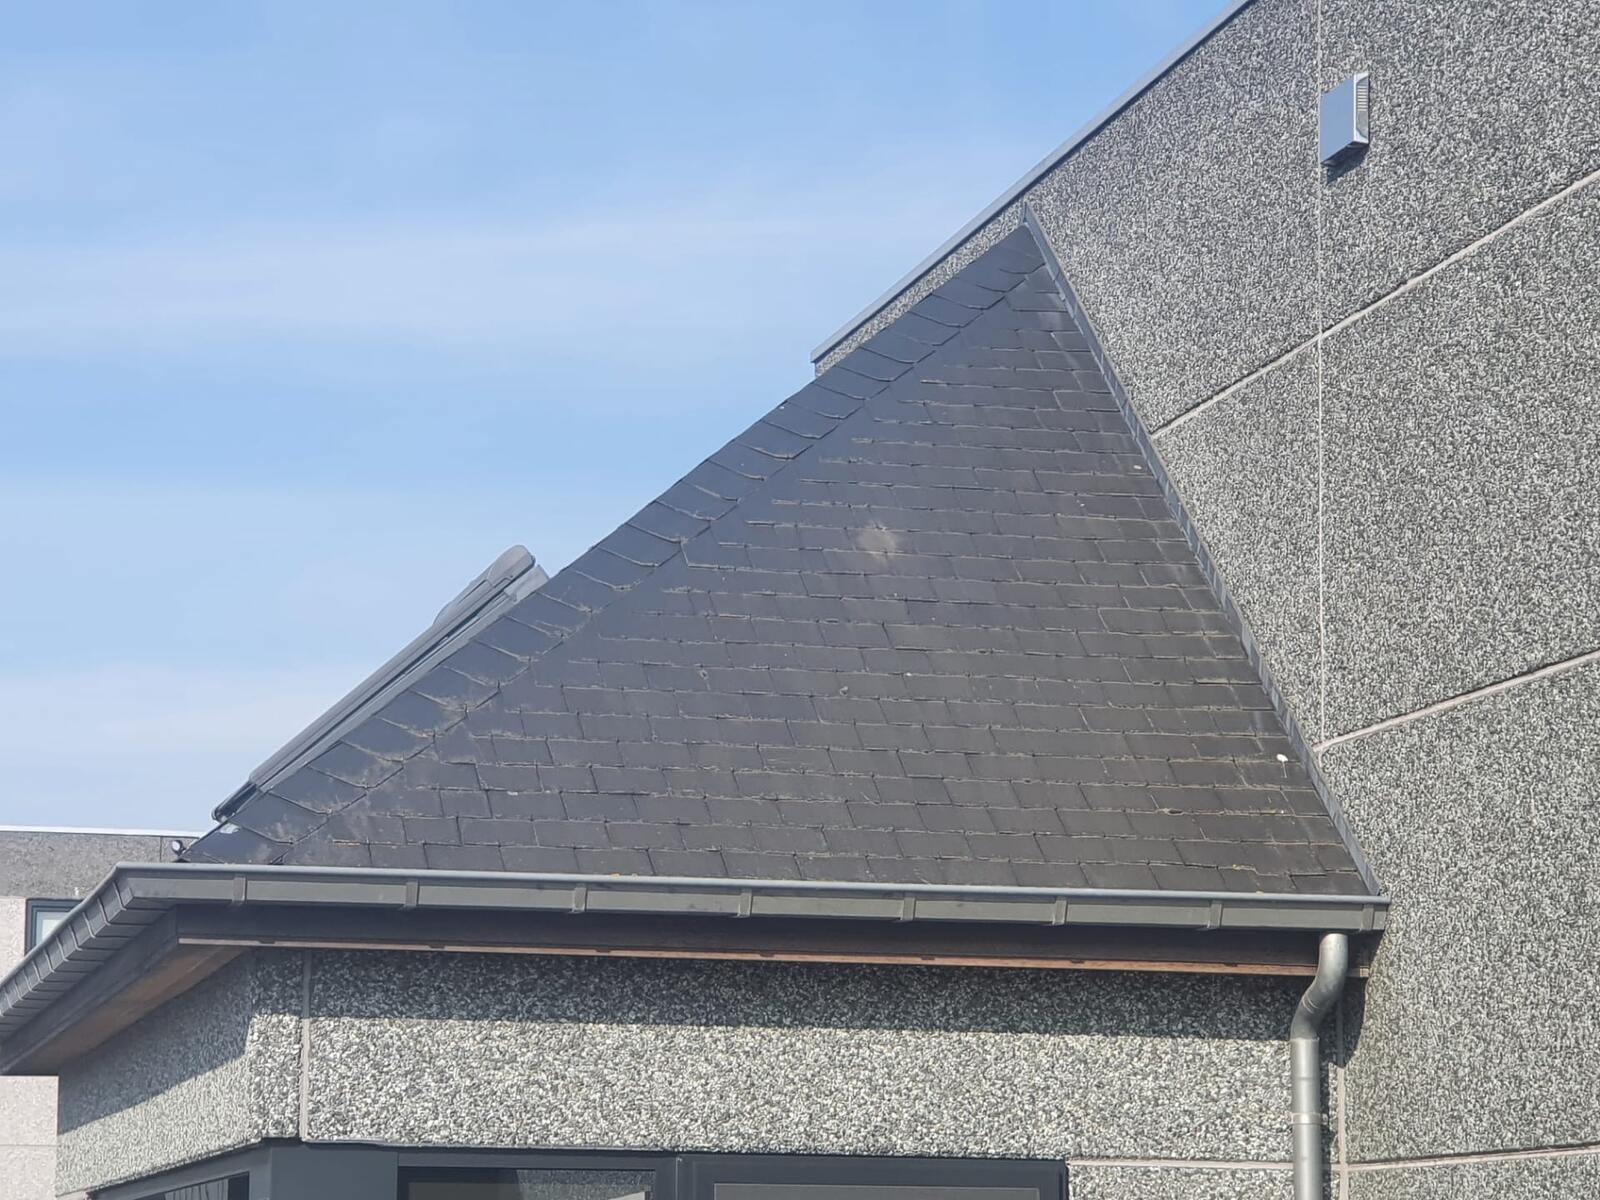 dddakwerken - ontmossen van daken - Tielt - 2020